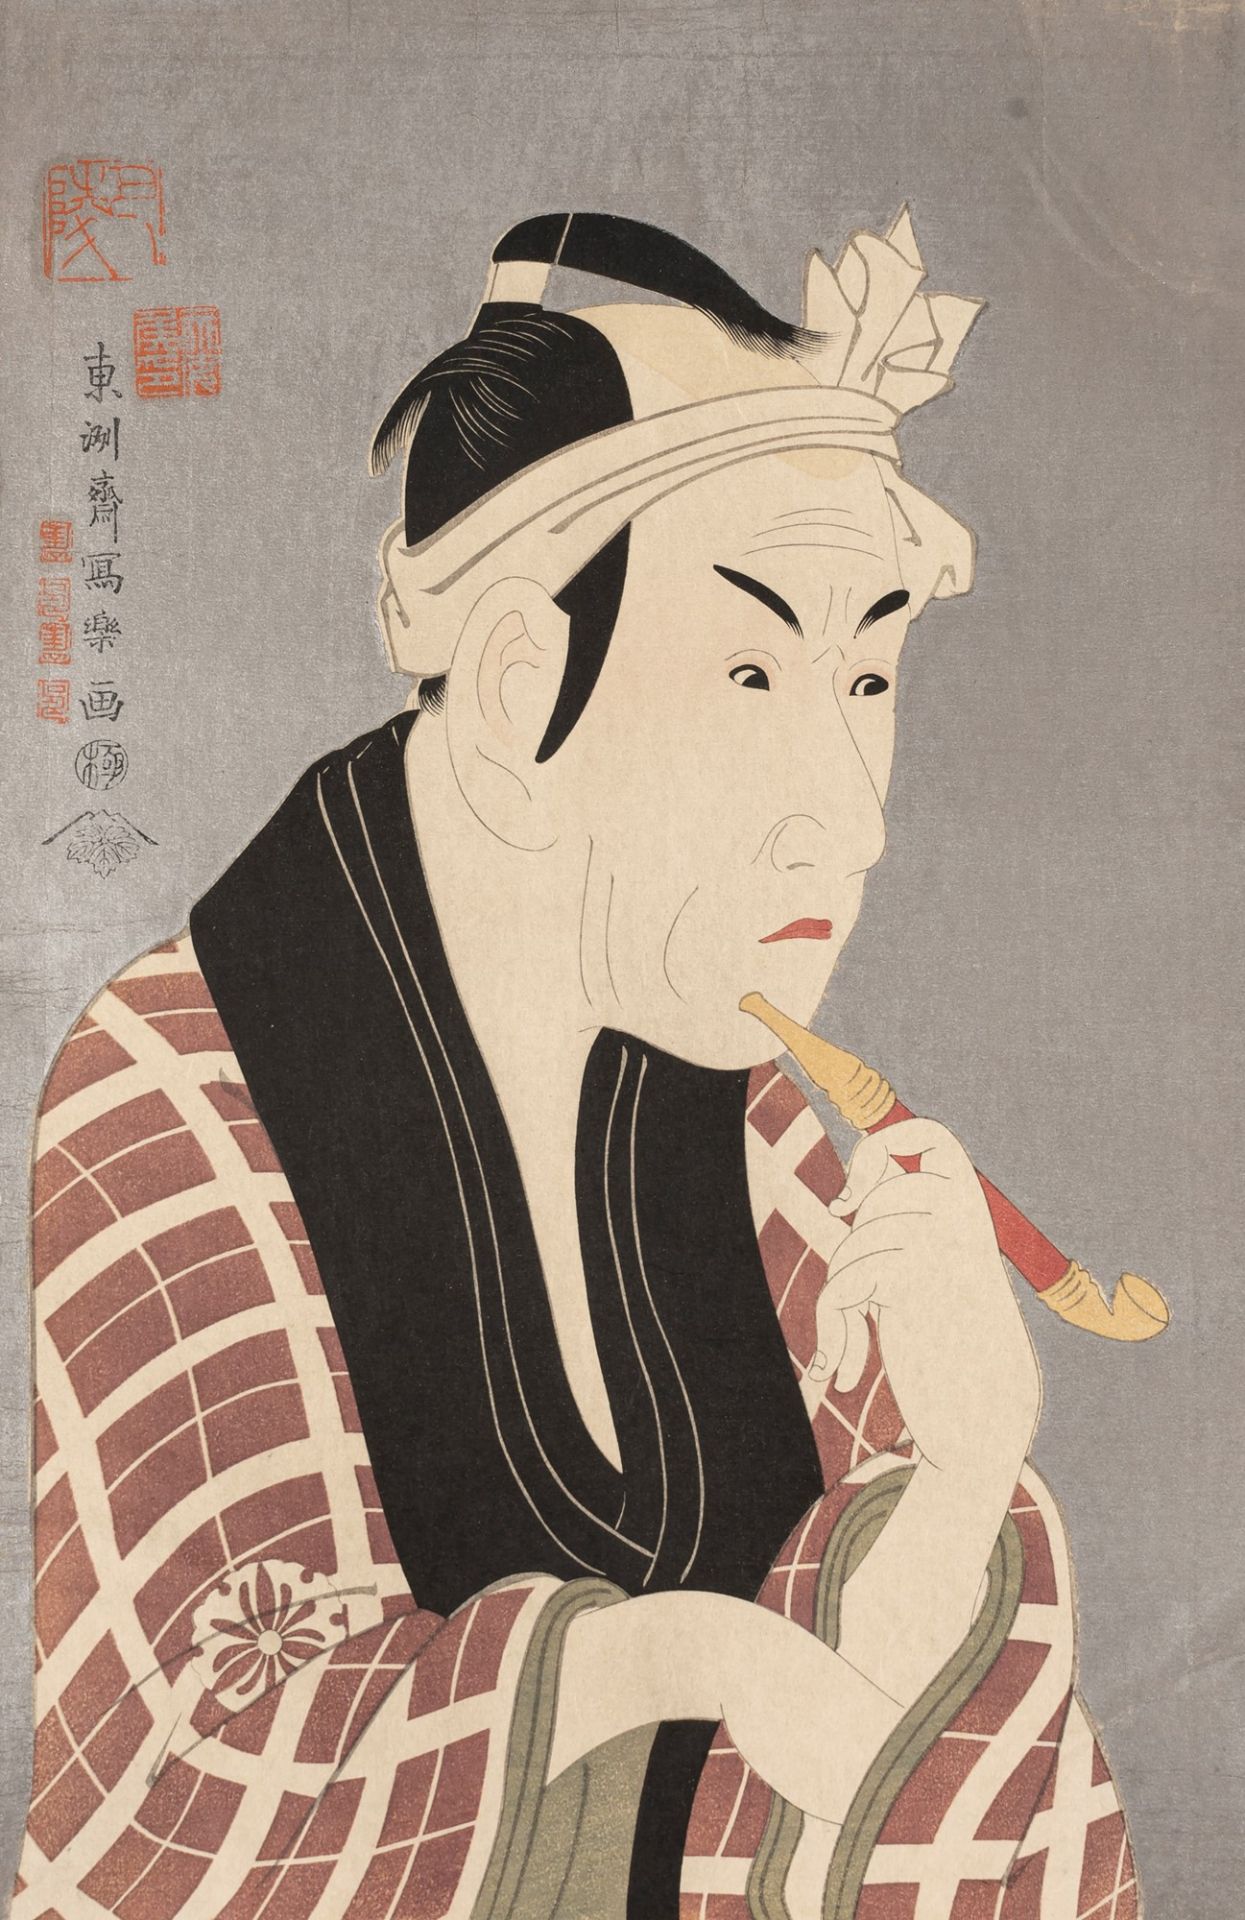 Sharaku - Five woodcuts representing theatrical masks, Japan, Taisho period - Image 2 of 5